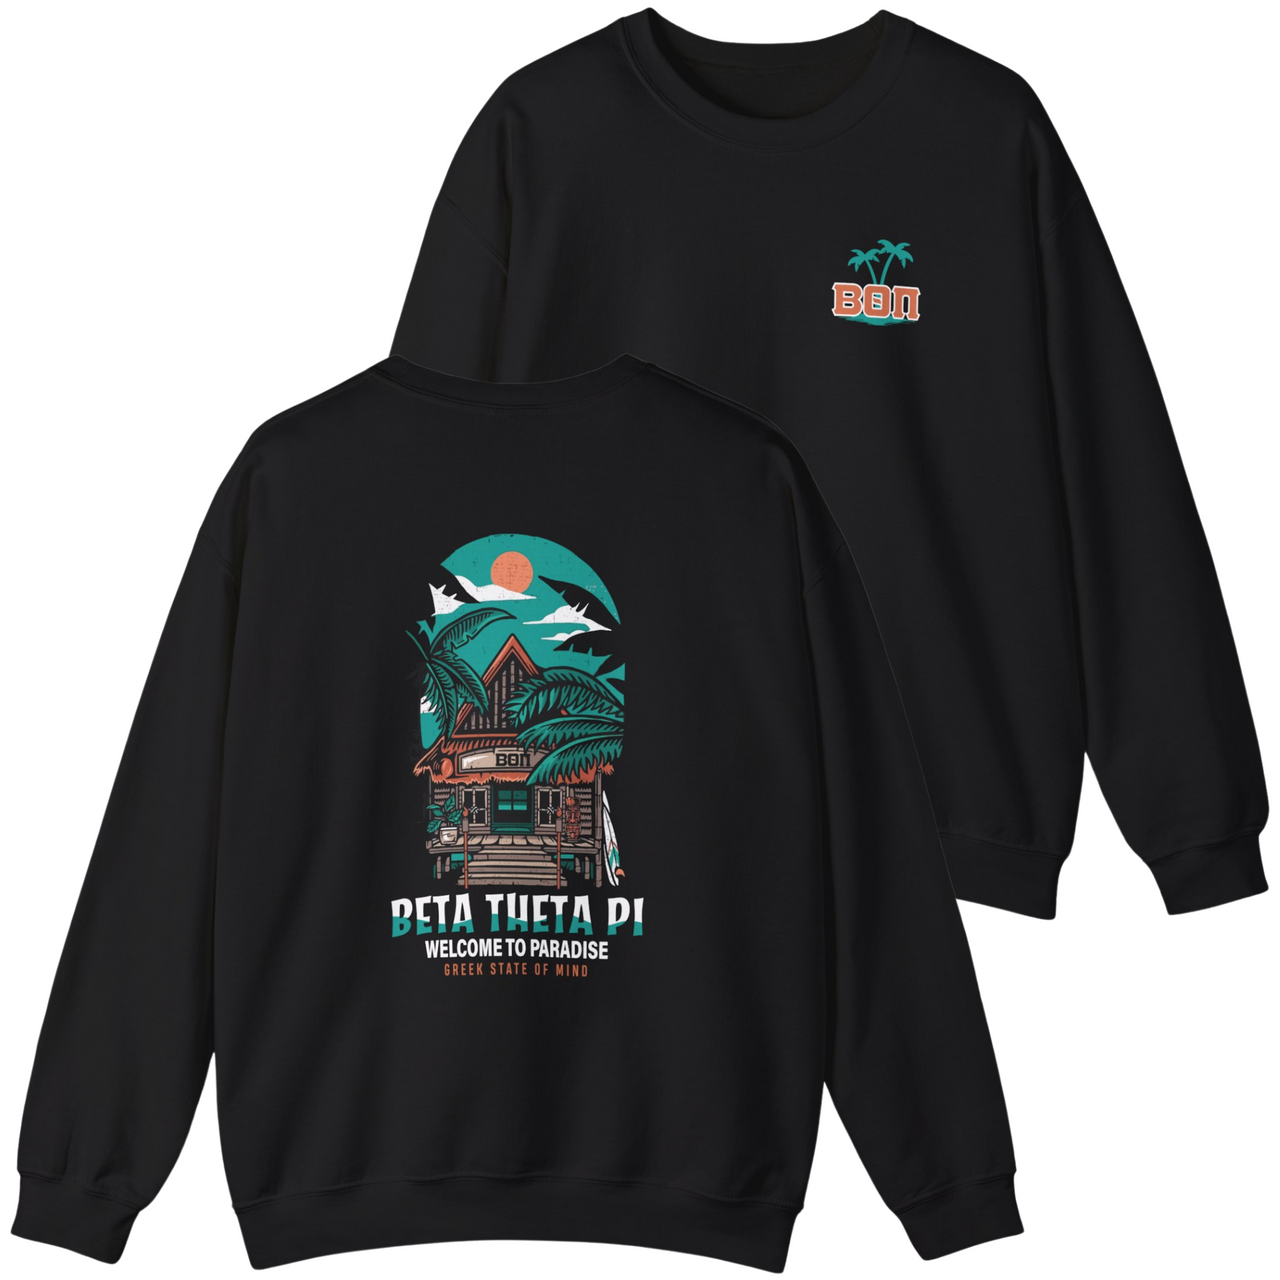 Beta Theta Pi Graphic Crewneck Sweatshirt | Welcome to Paradise